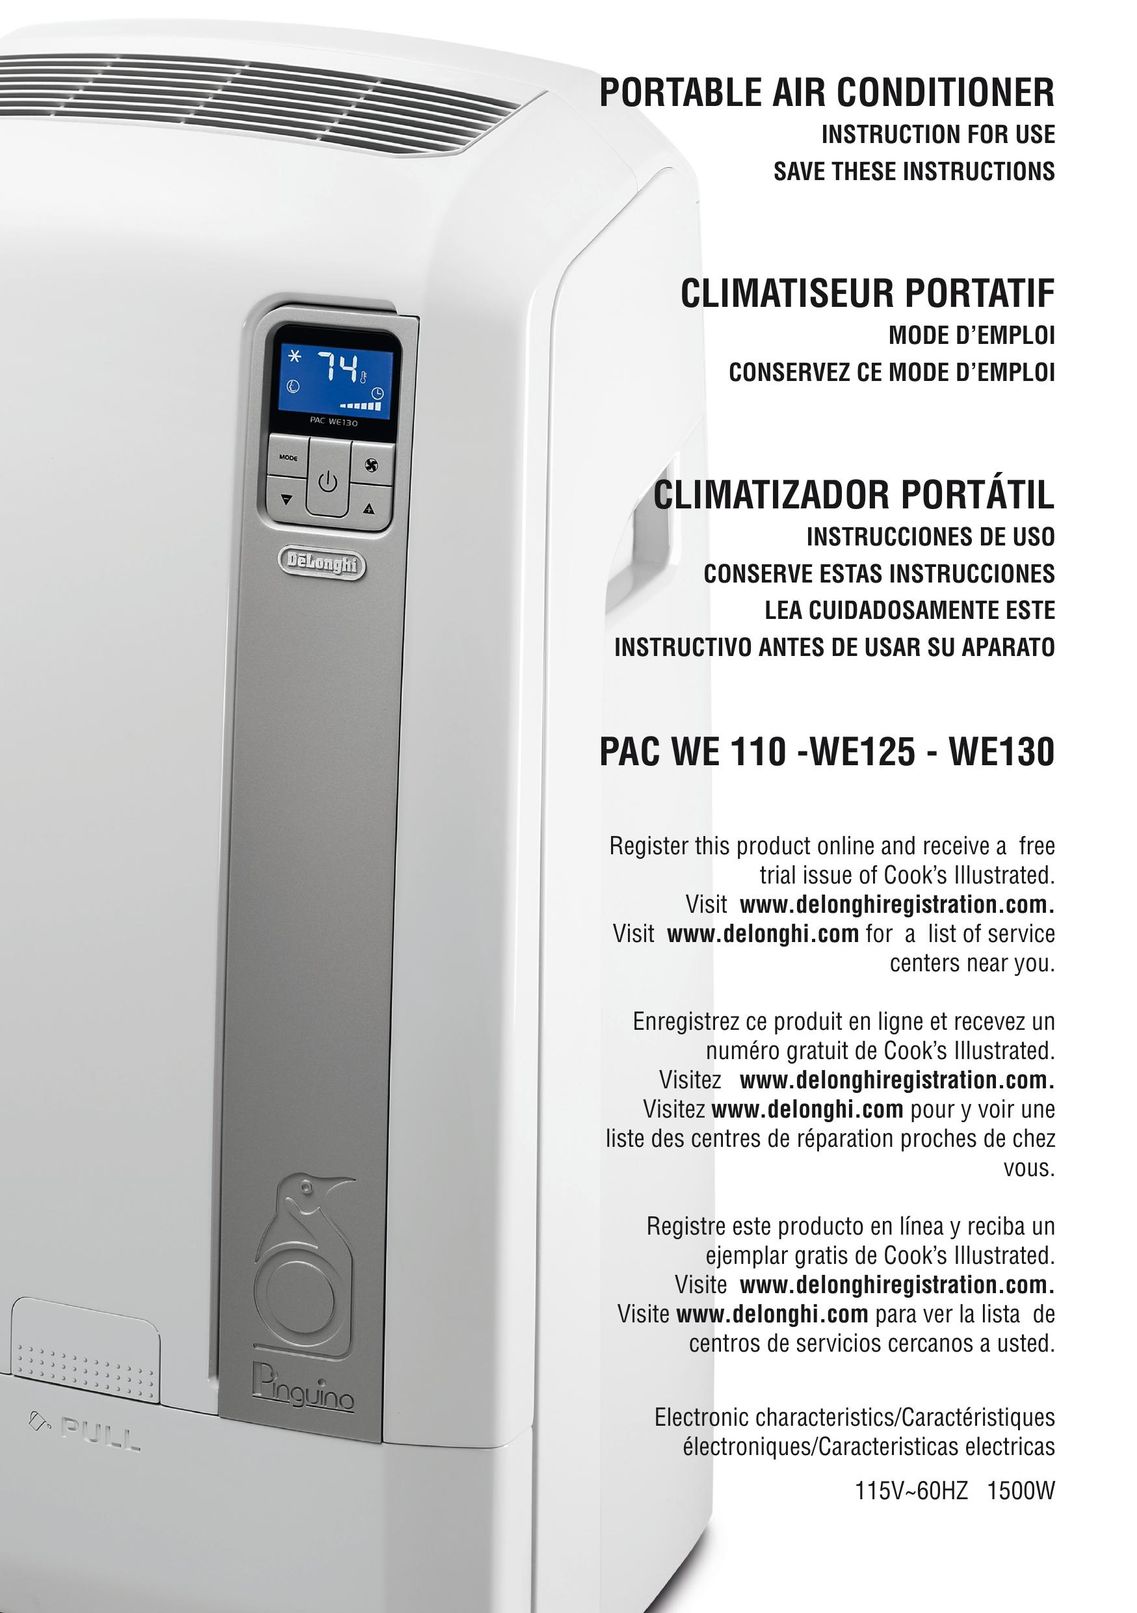 DeLonghi PAC WE 110 Air Conditioner User Manual